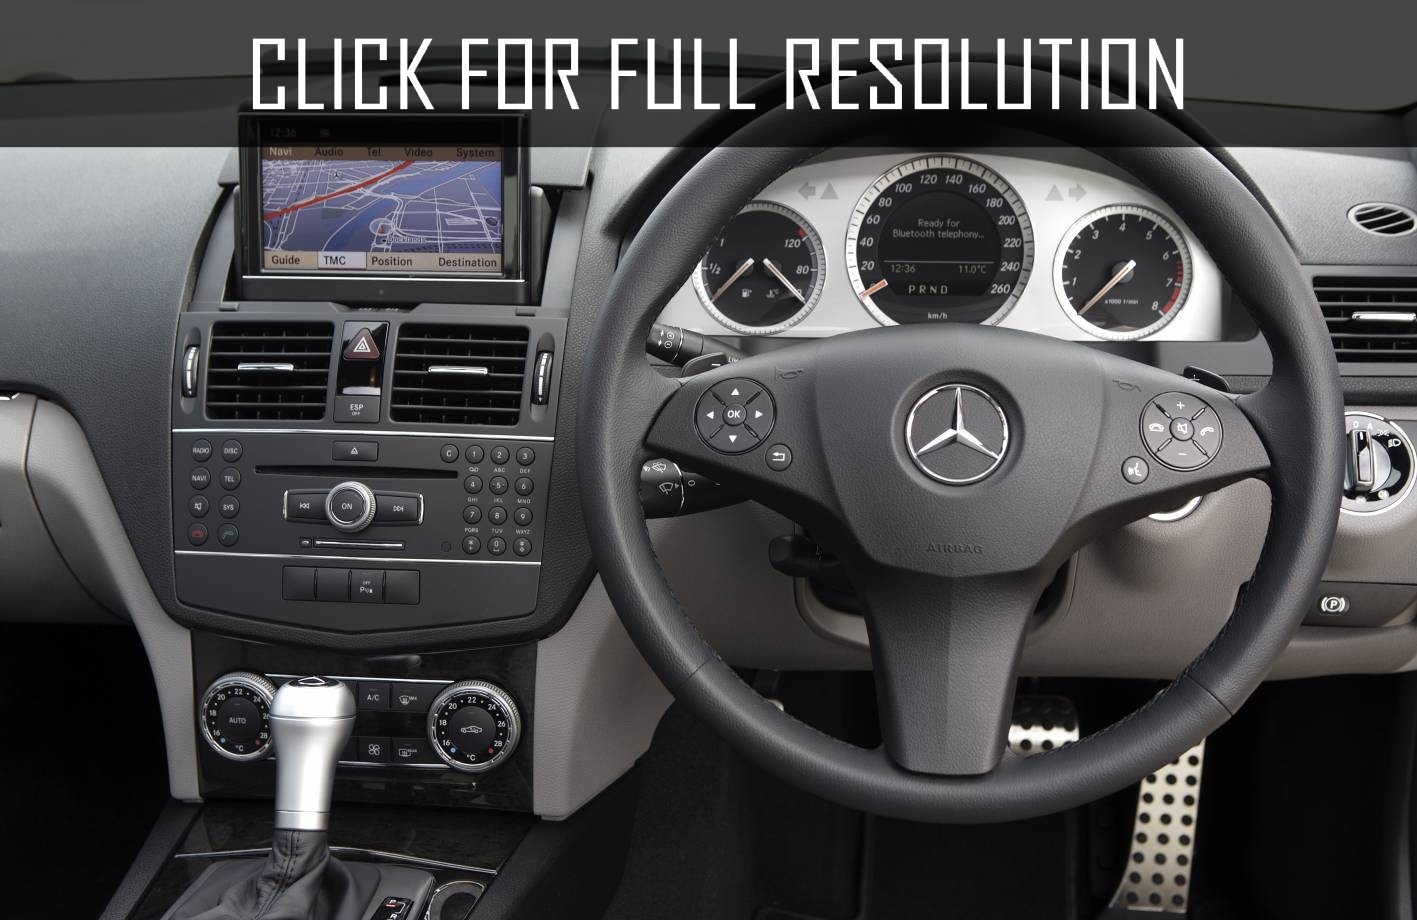 Mercedes Benz C200 Kompressor 2010 Reviews Prices